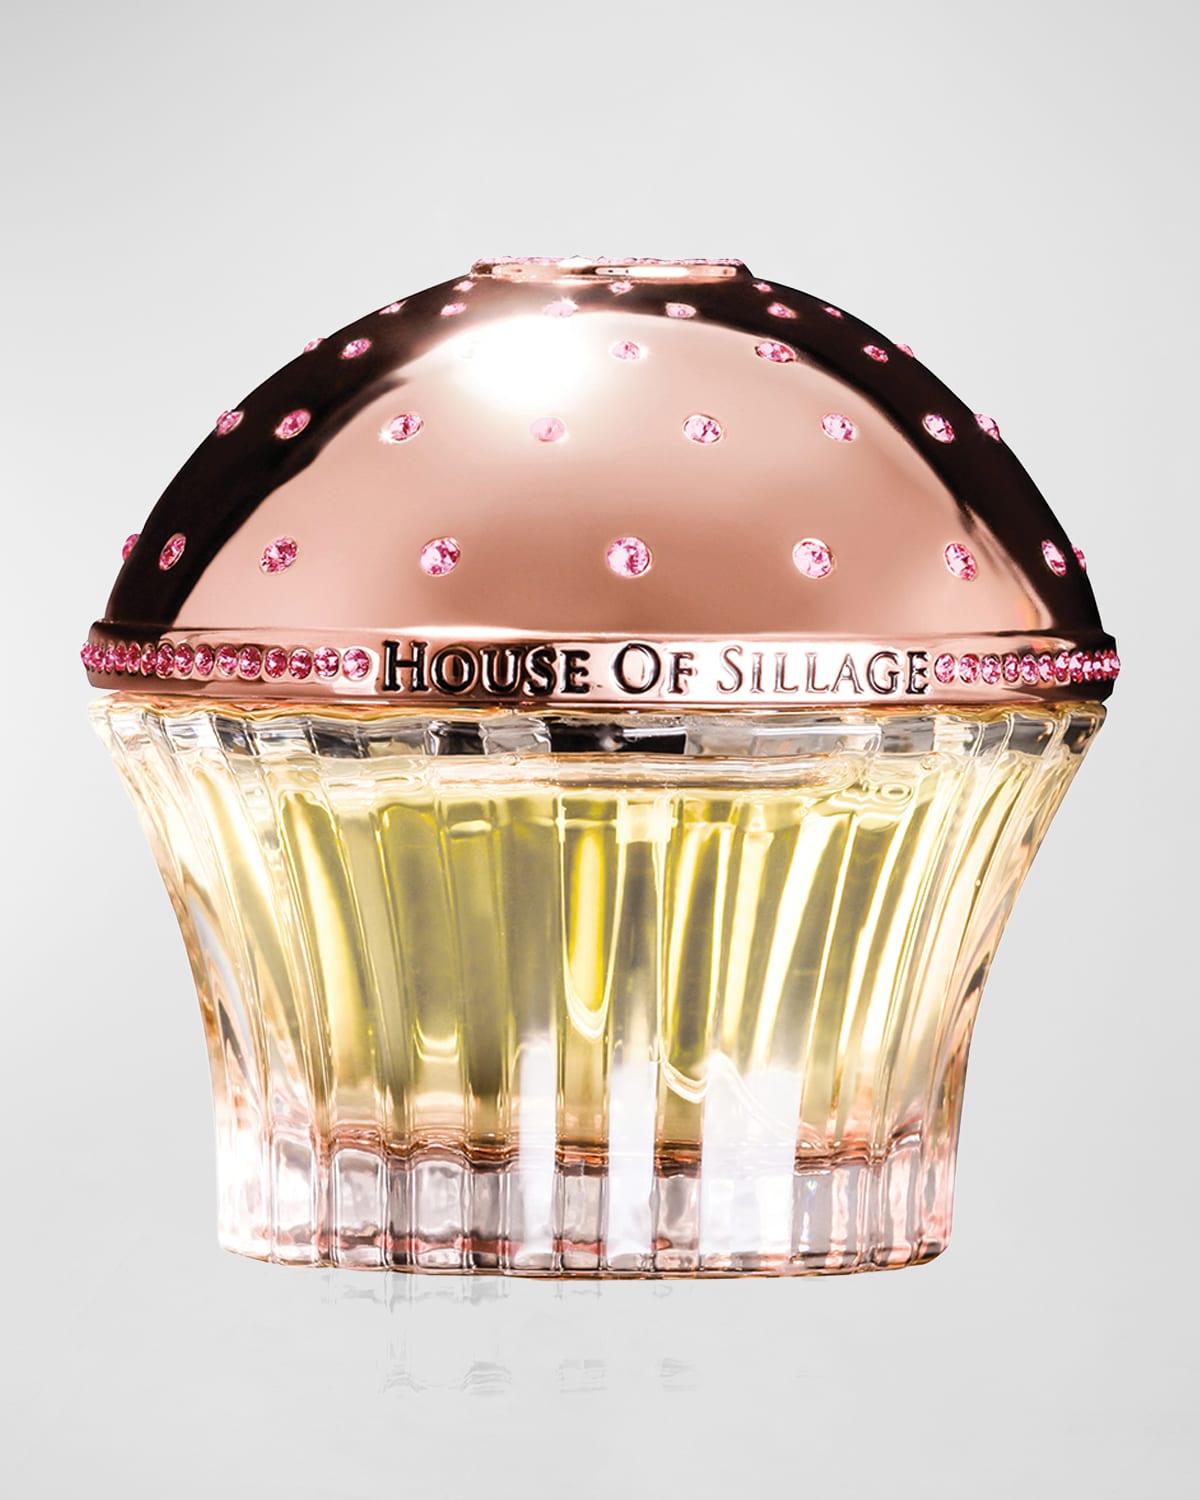 House of Sillage Signature Hauts Bijoux Fragrance, 2.5 oz./ 75 mL